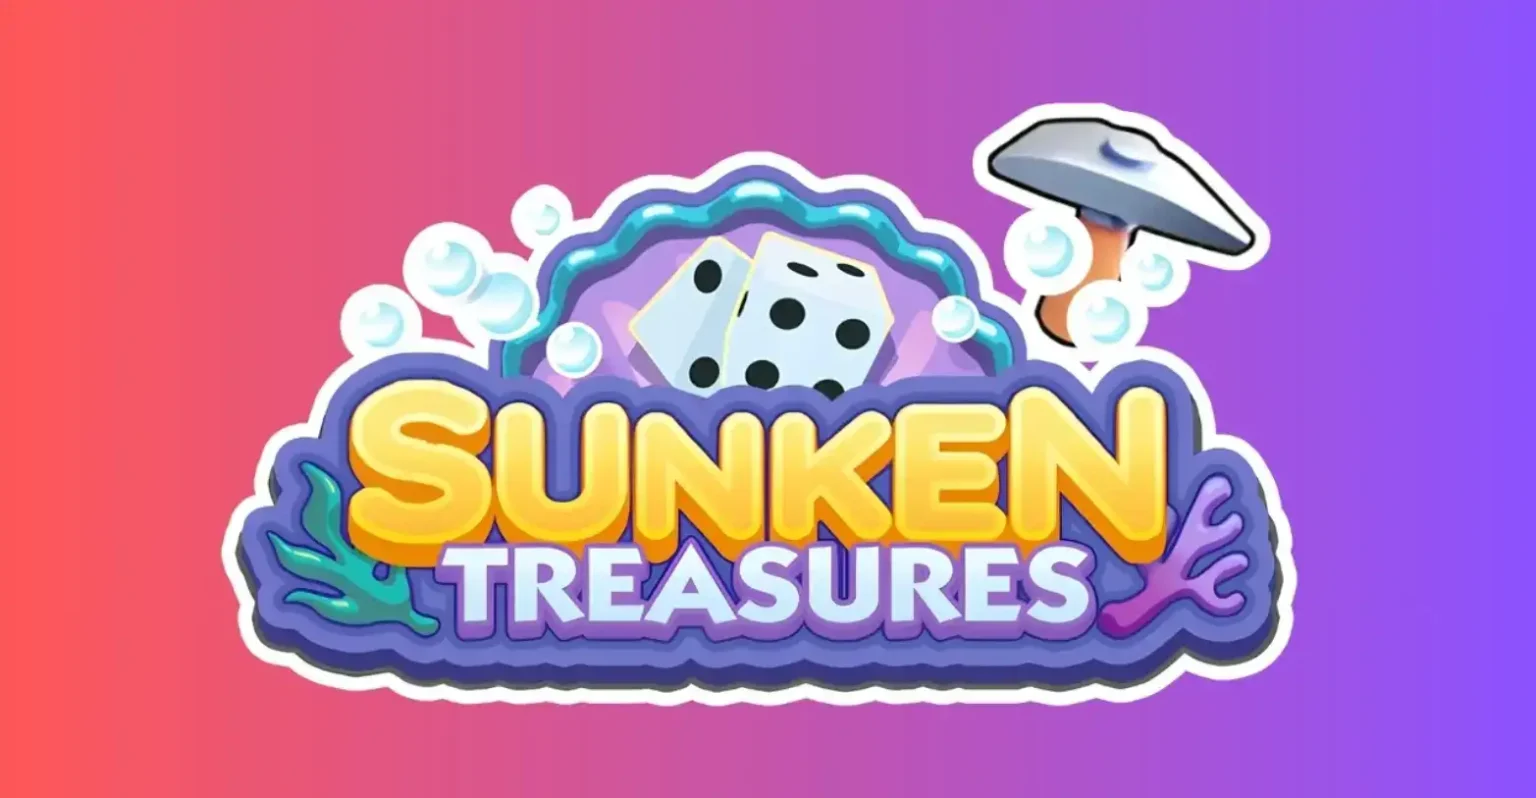 monopoly-go-sunken-treasures-rewards-and-milestones-1536x798